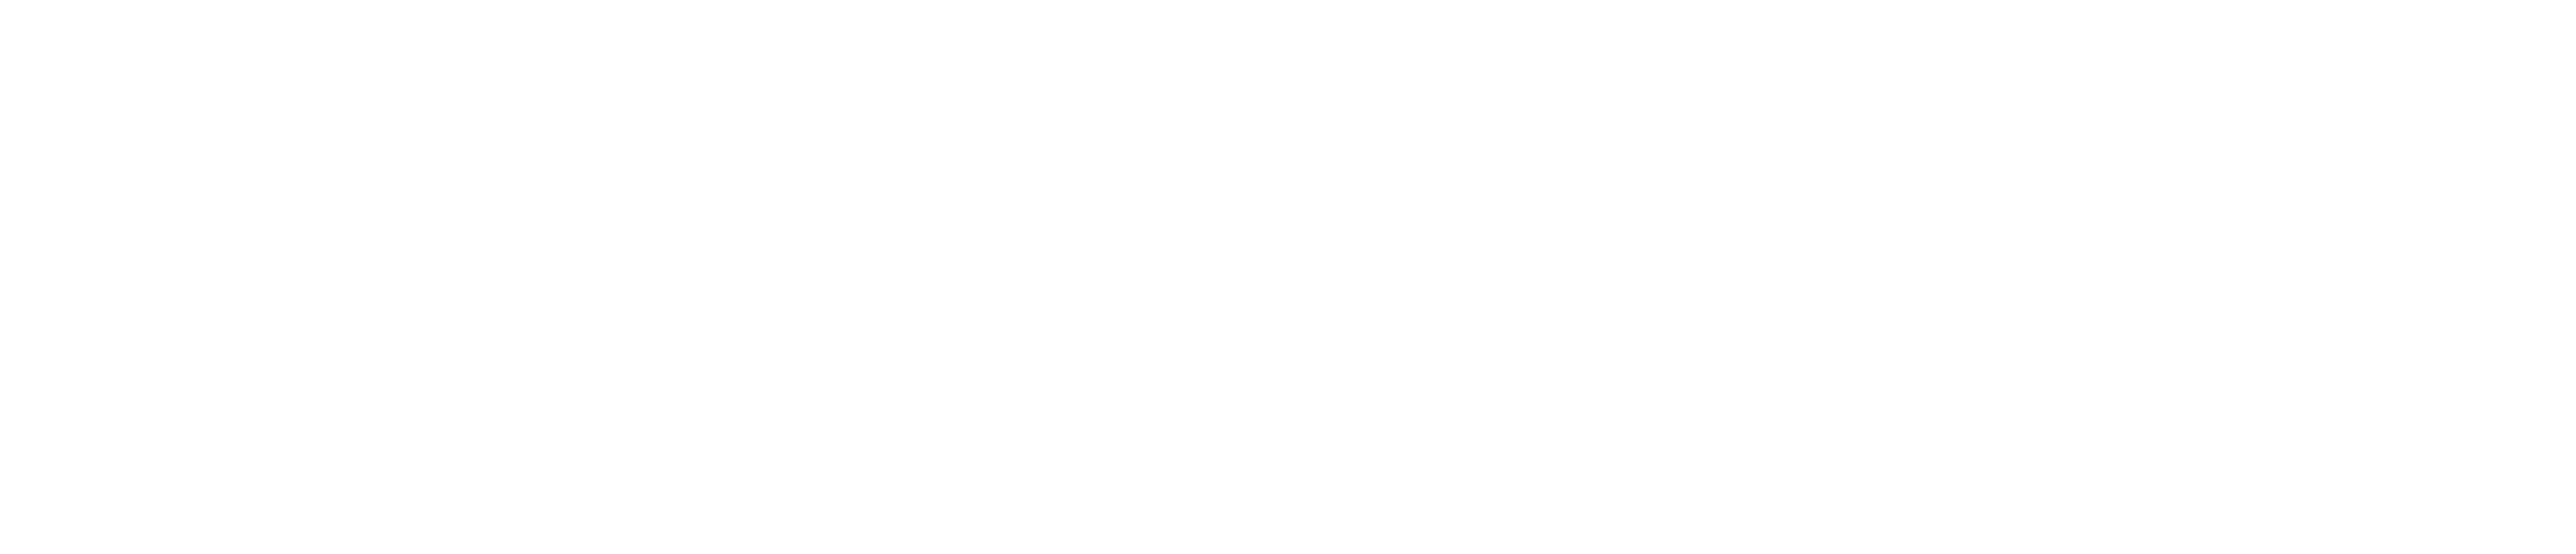 Planet Earth: Life